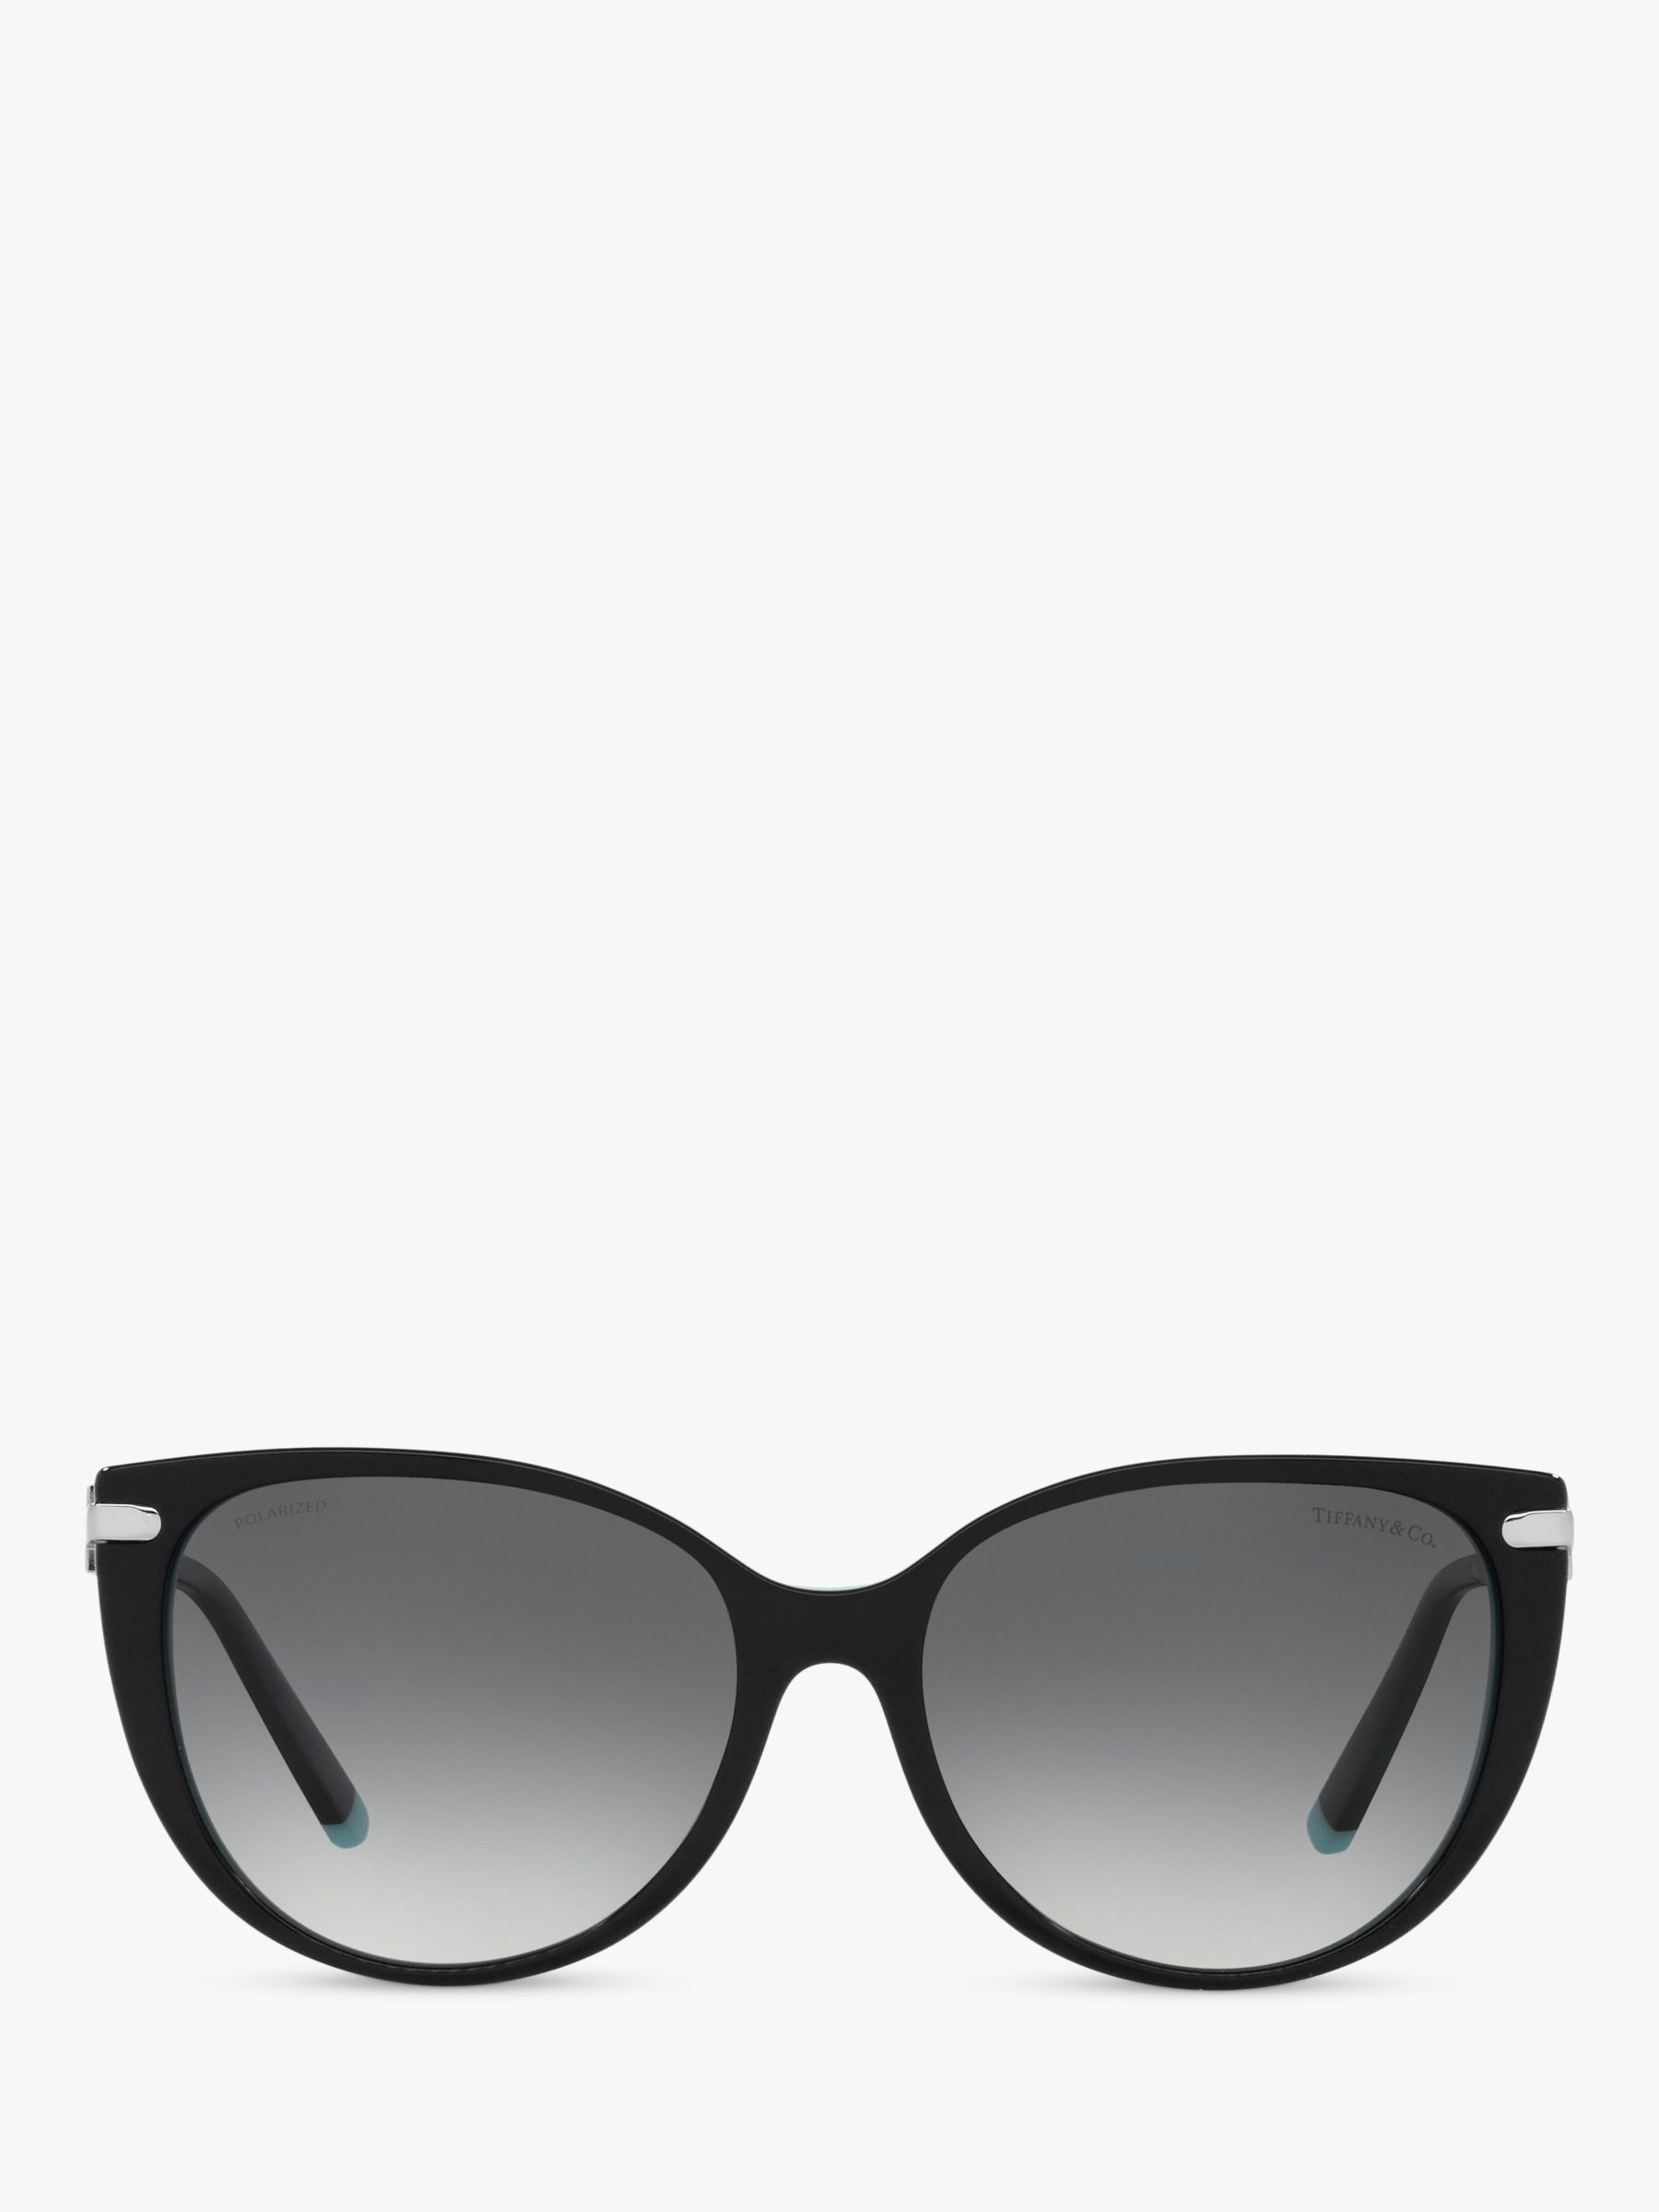 Tiffany & Co TF4178 Women's Polarised Cat's Eye Sunglasses, Black ...